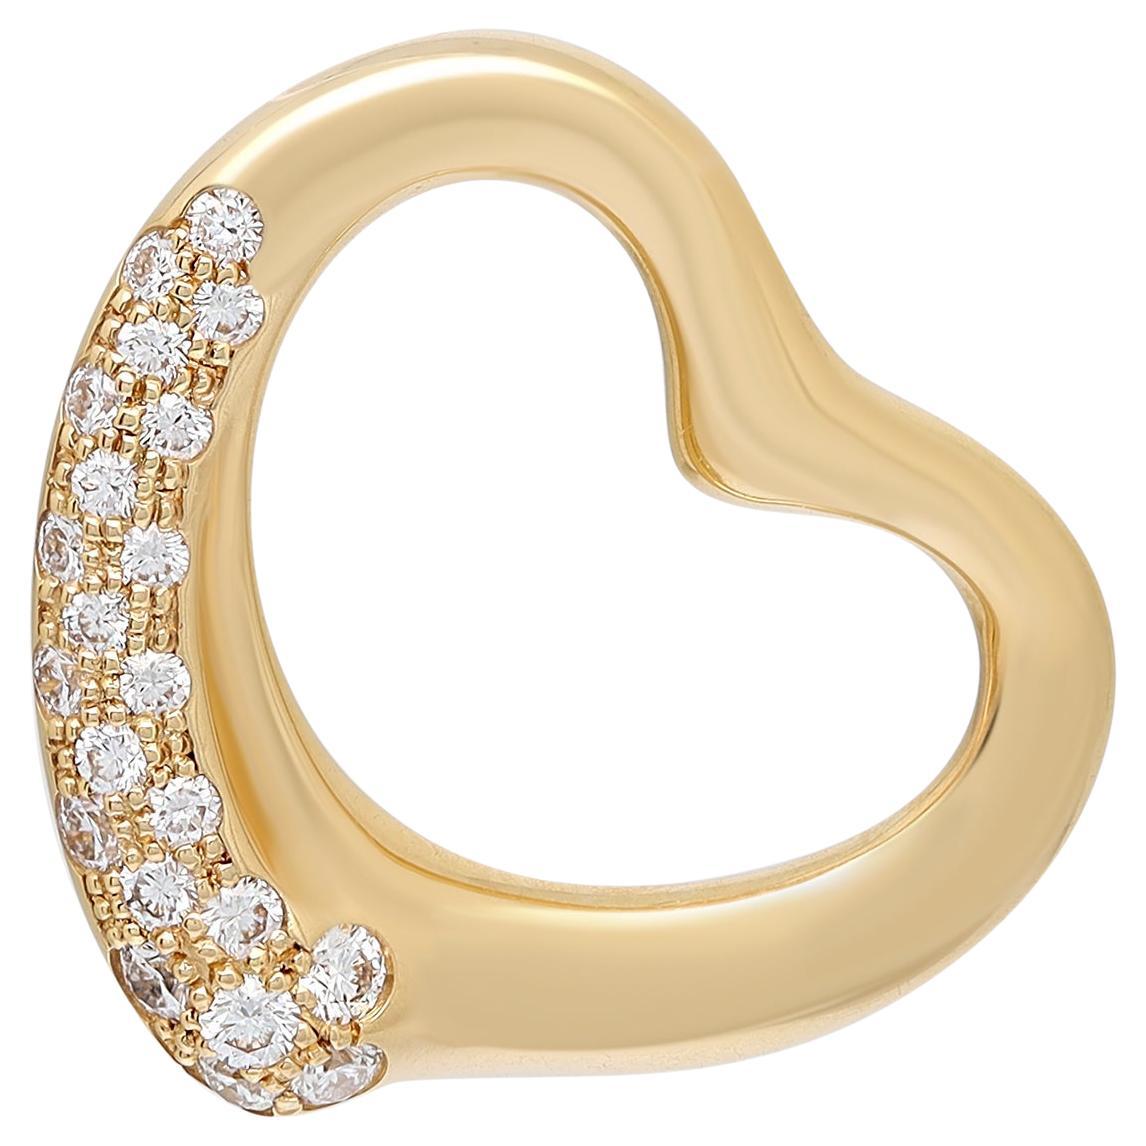 Tiffany & Co. Elsa Peretti Diamond Open Heart Pendant 18k Yellow Gold 0.33cttw For Sale